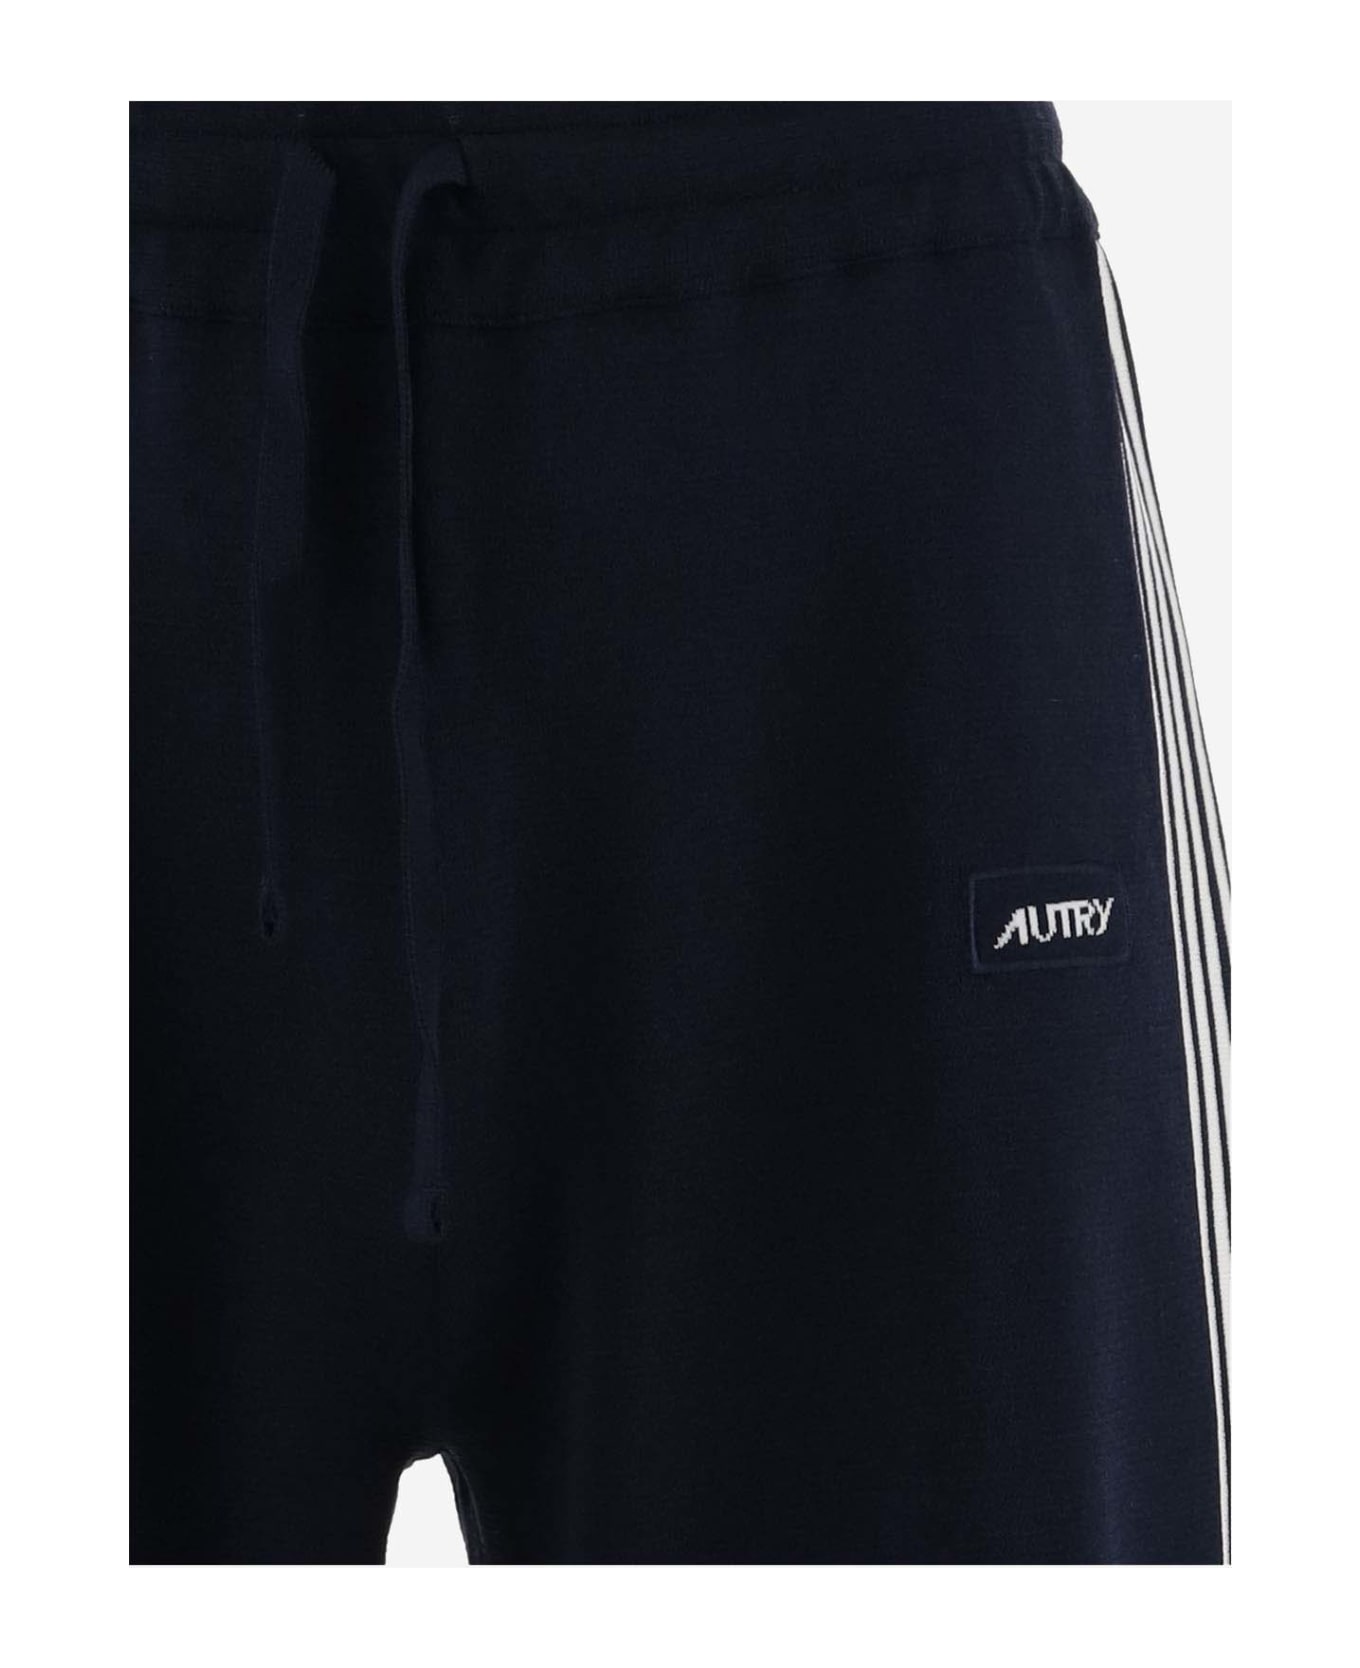 Autry Viscose Blend Short Pants - Blue ショートパンツ